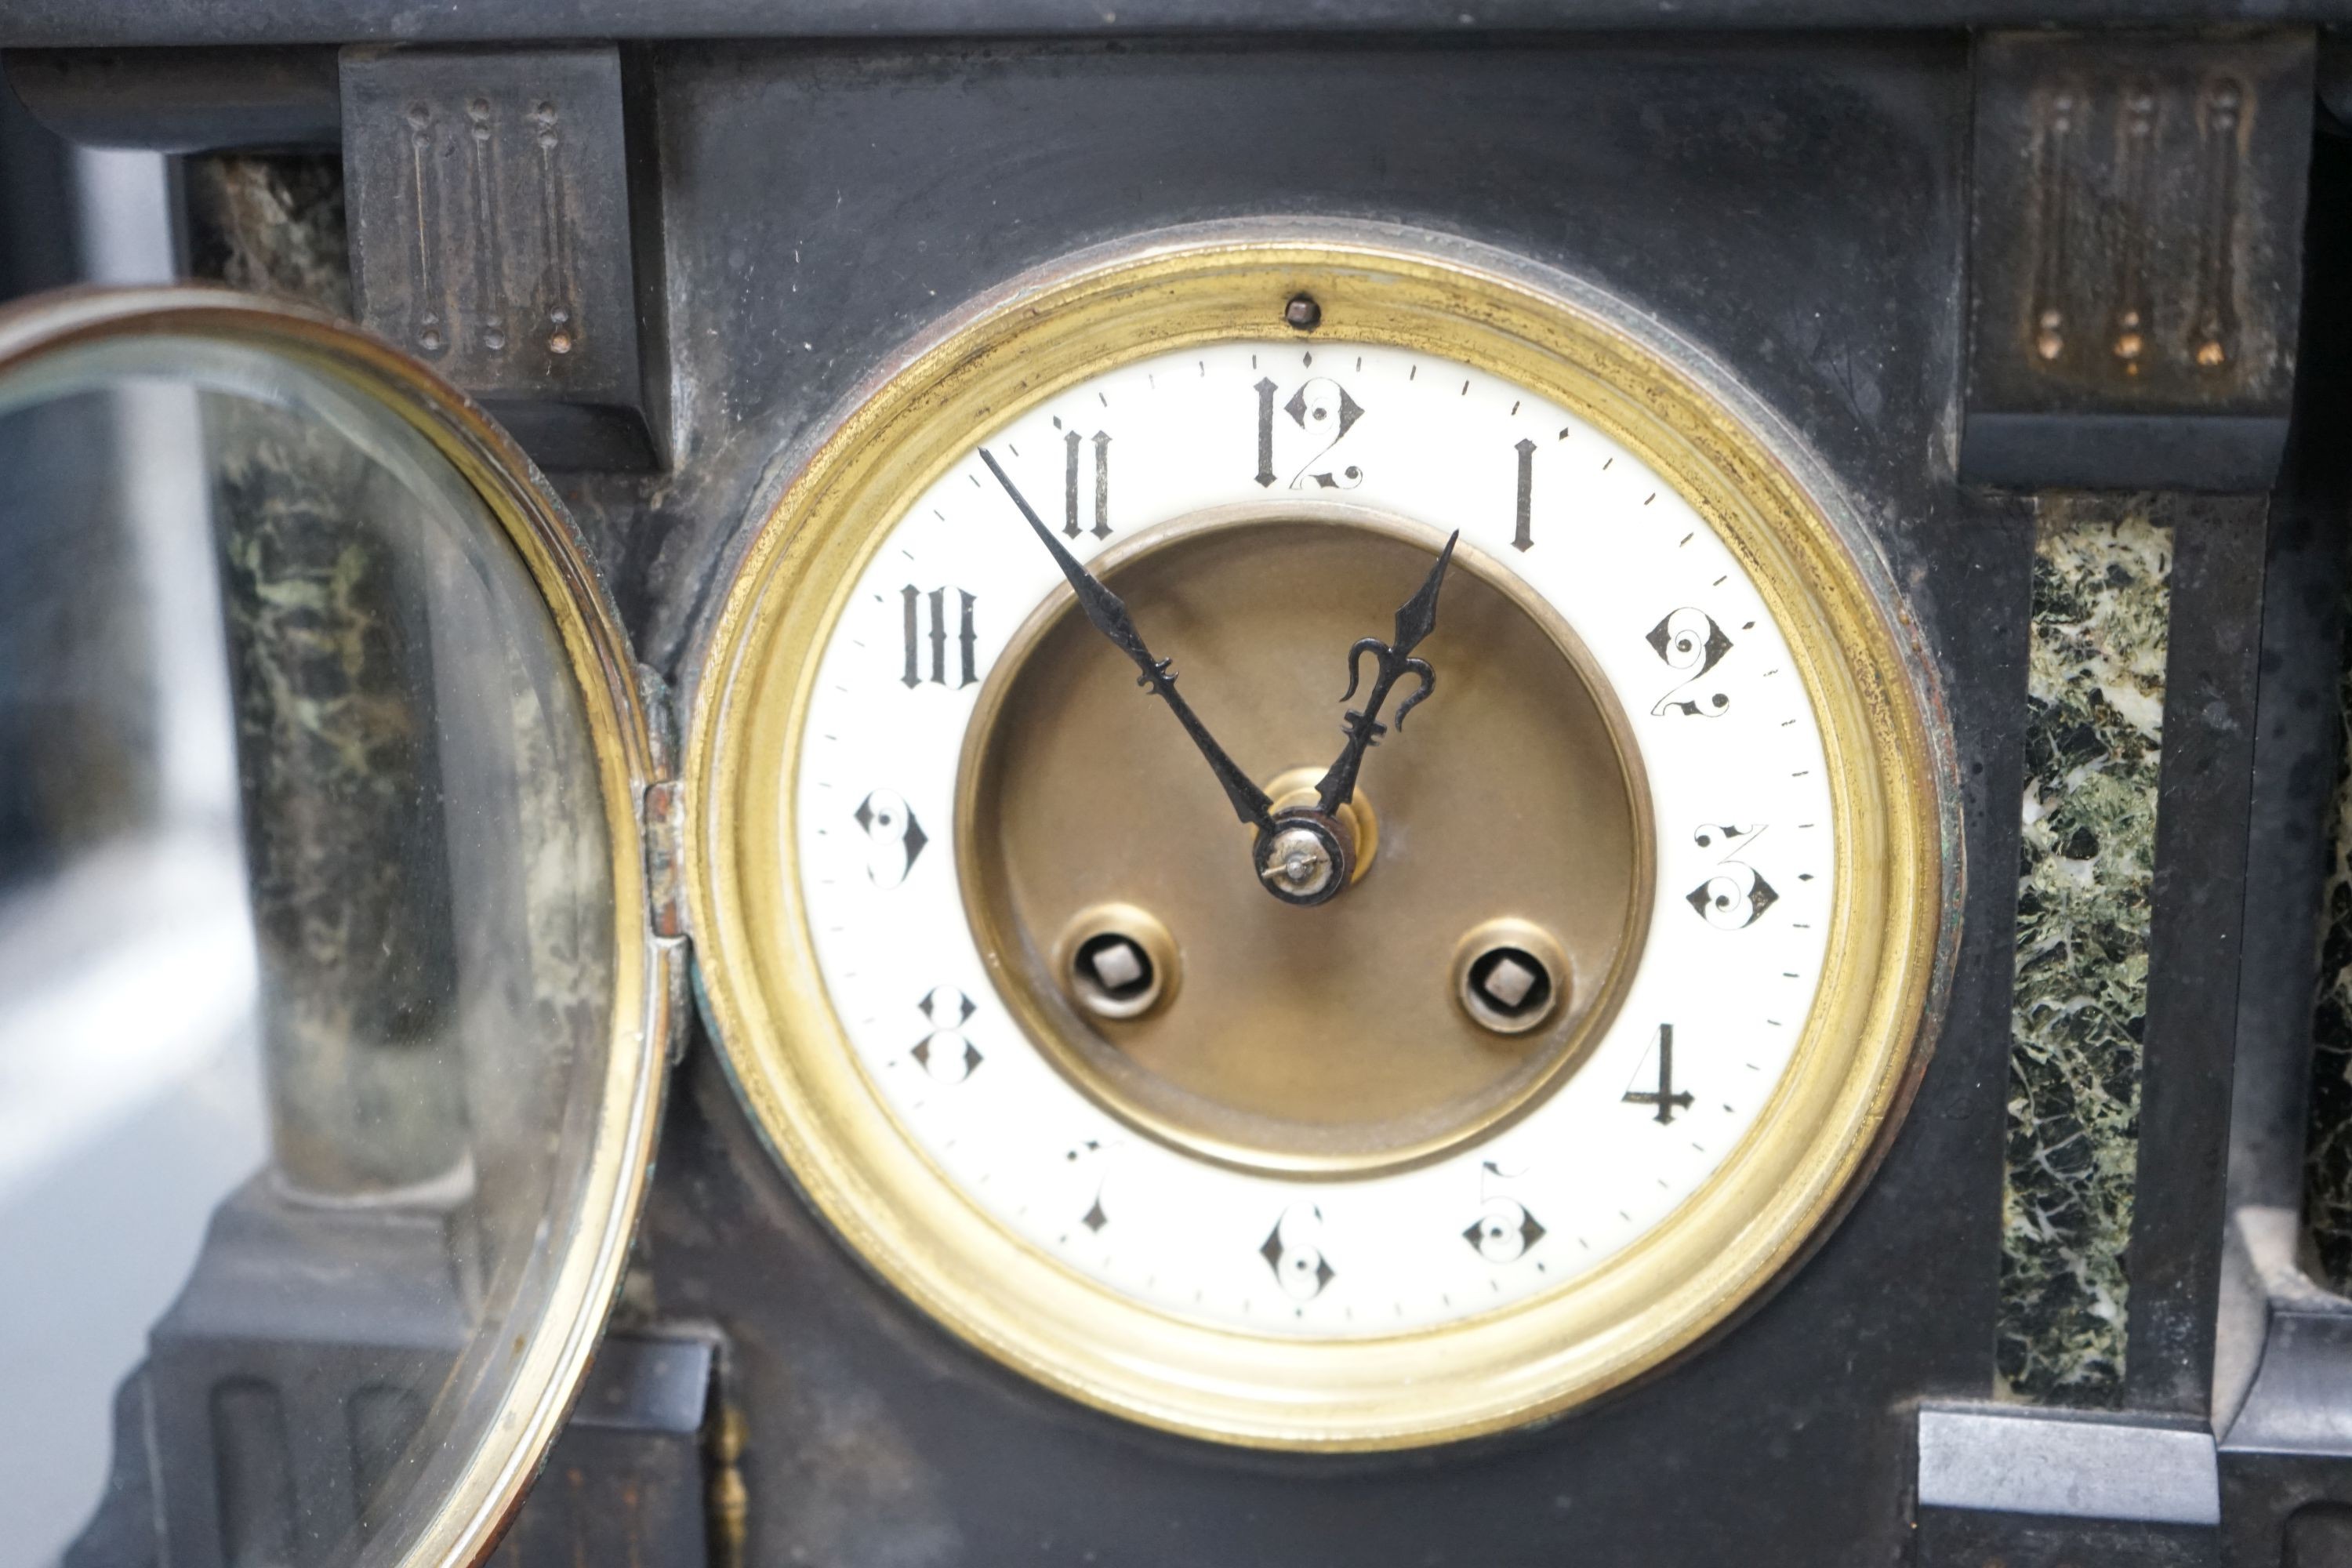 A Victorian slate mantel clock 33 cm high